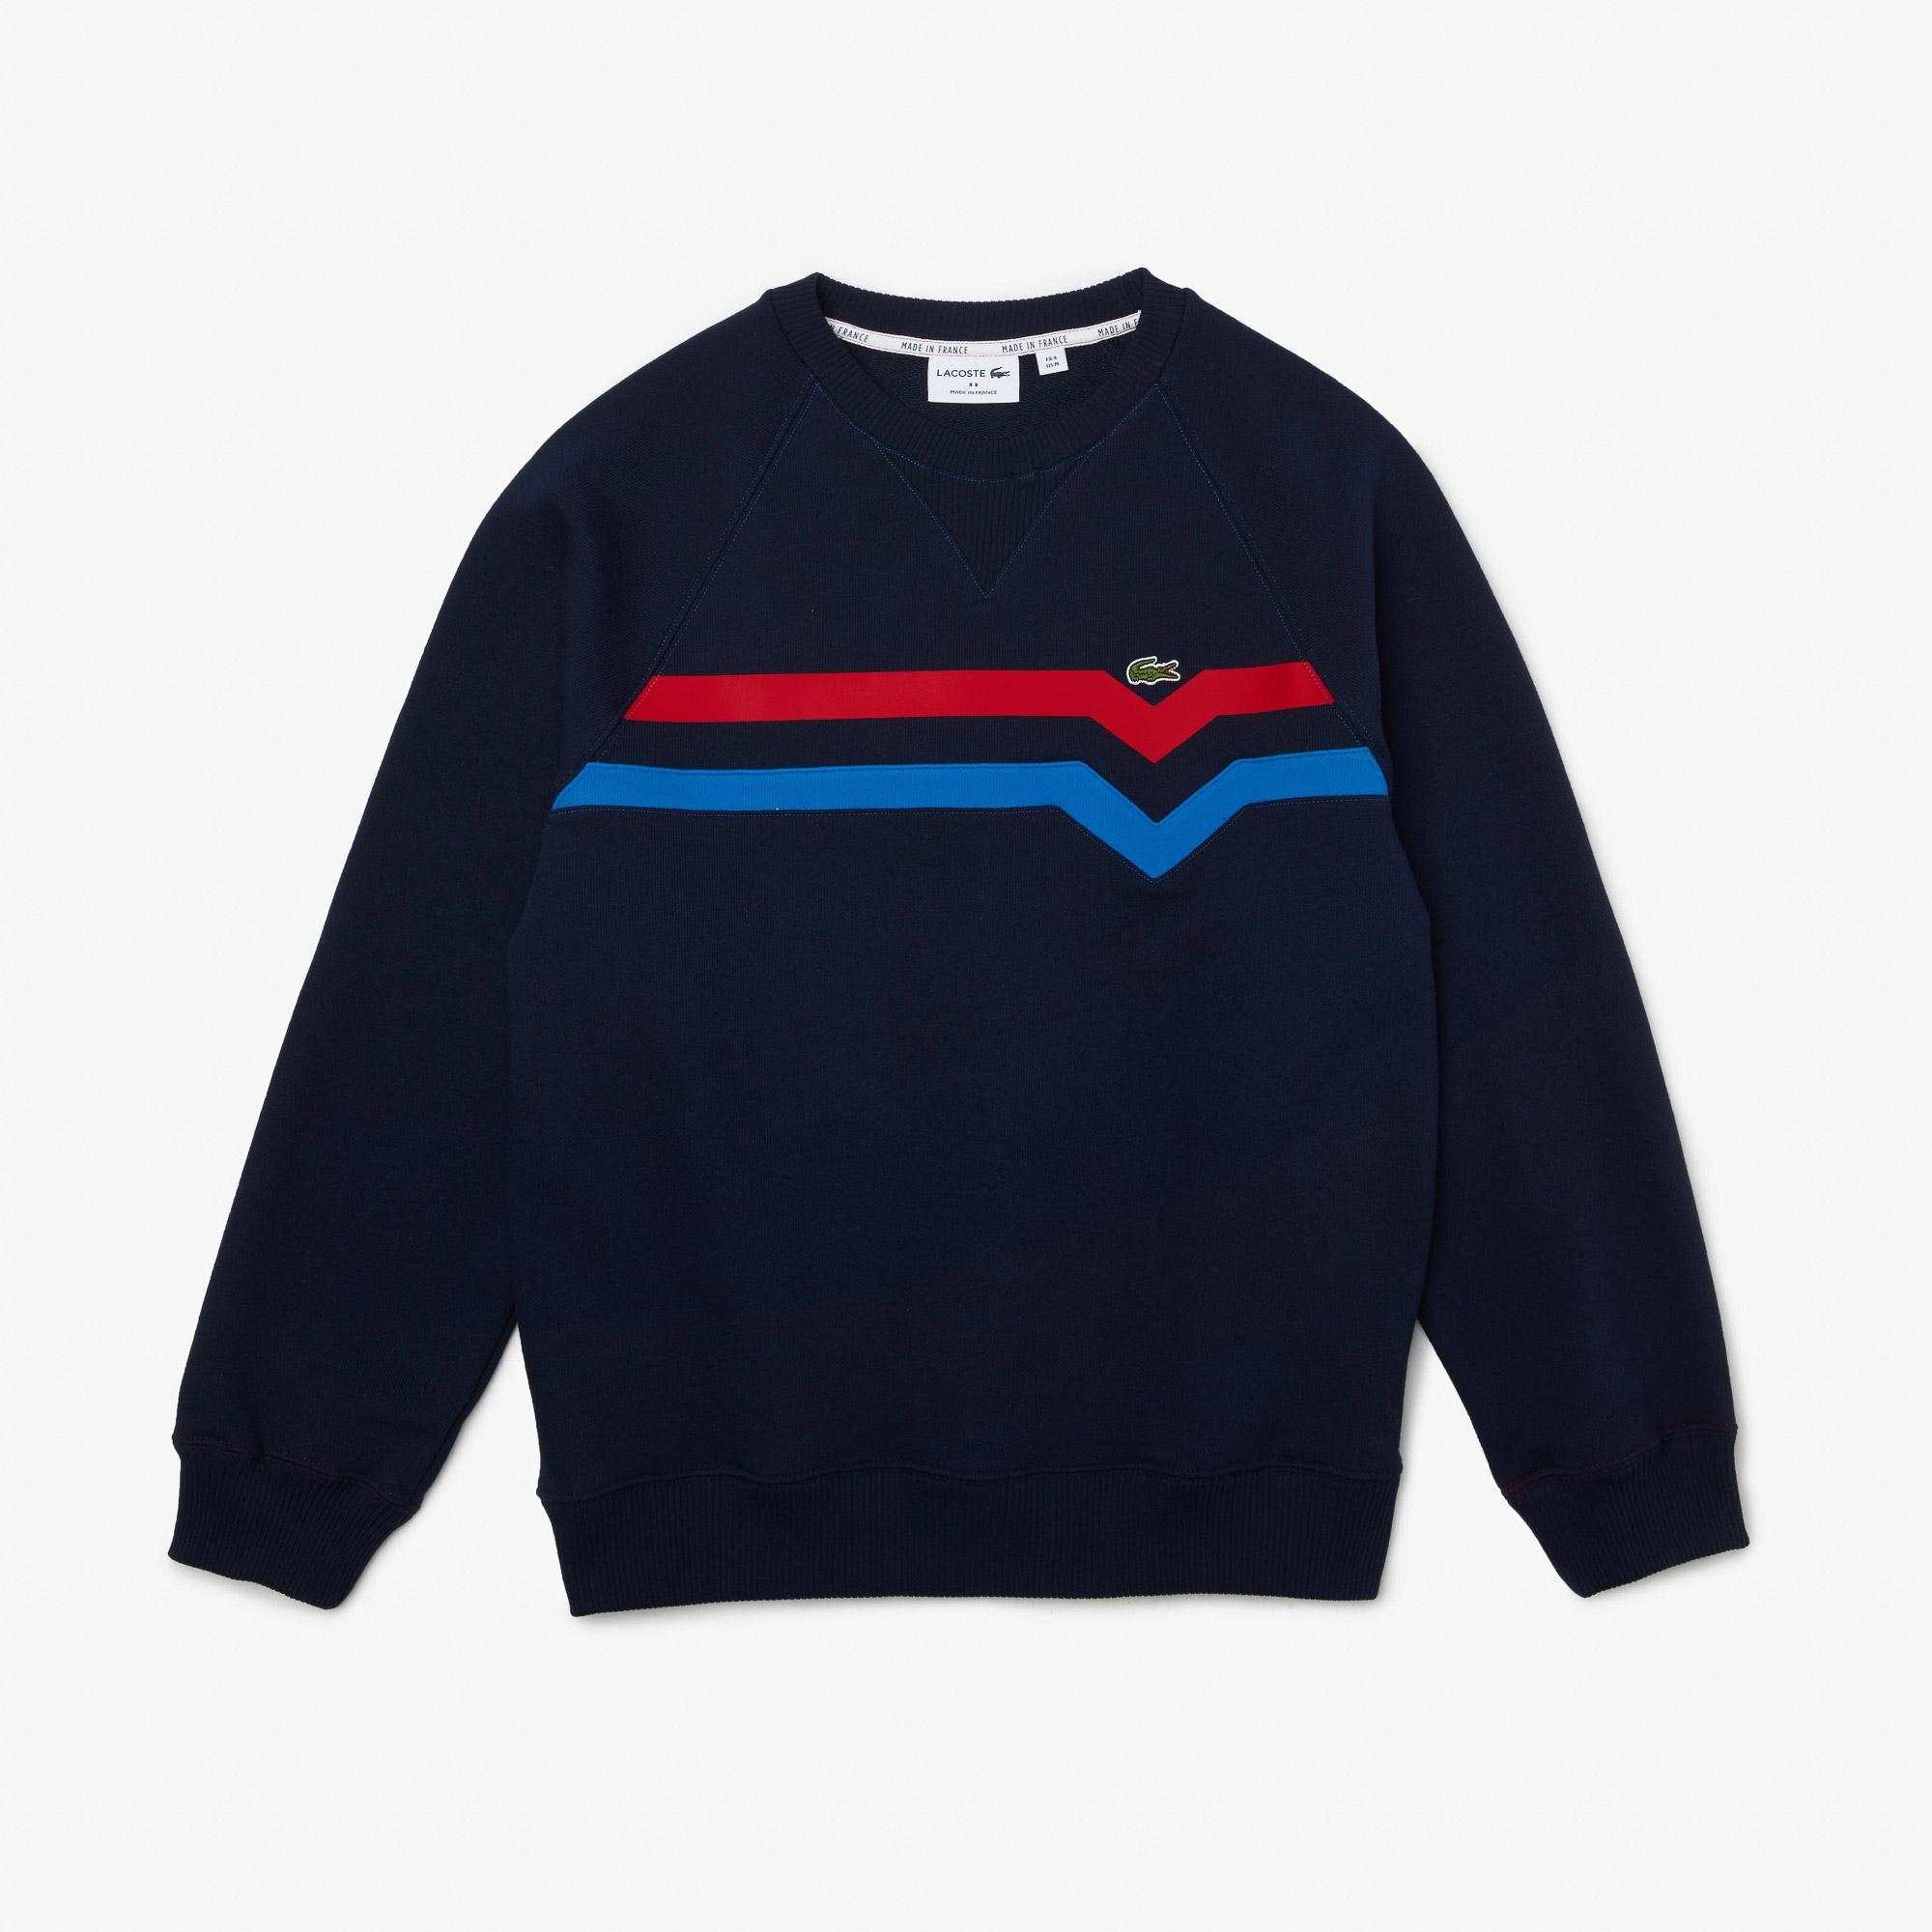 Lacoste Men’s Made in France Colorblock Fleece Loose Fit Sweatshirt